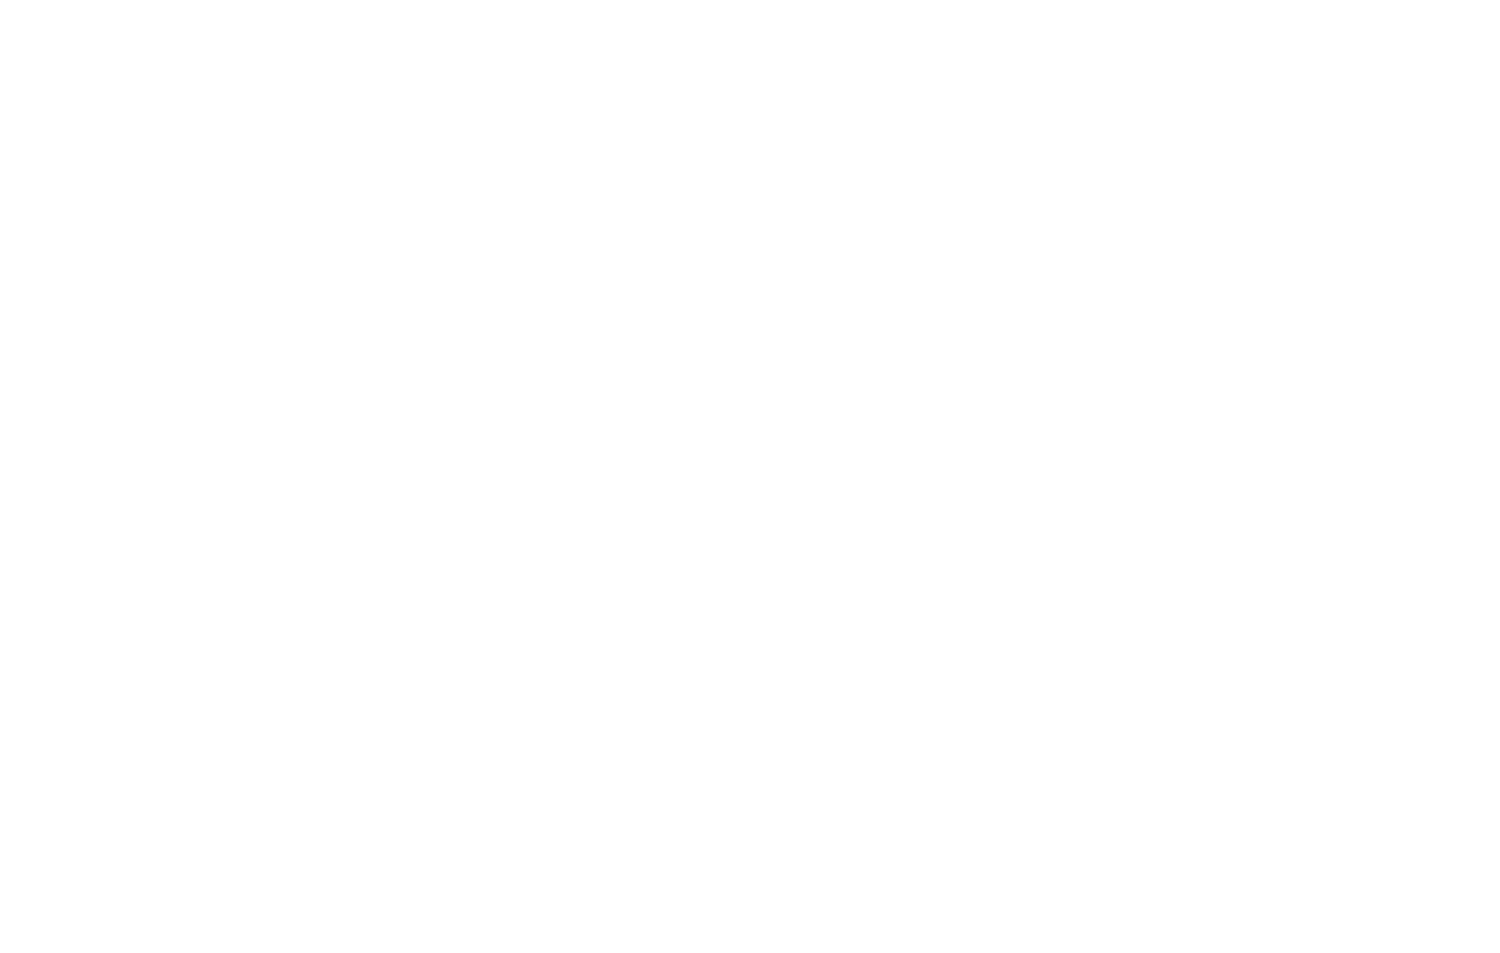 Cove Pediatric Dentistry & Orthodontics